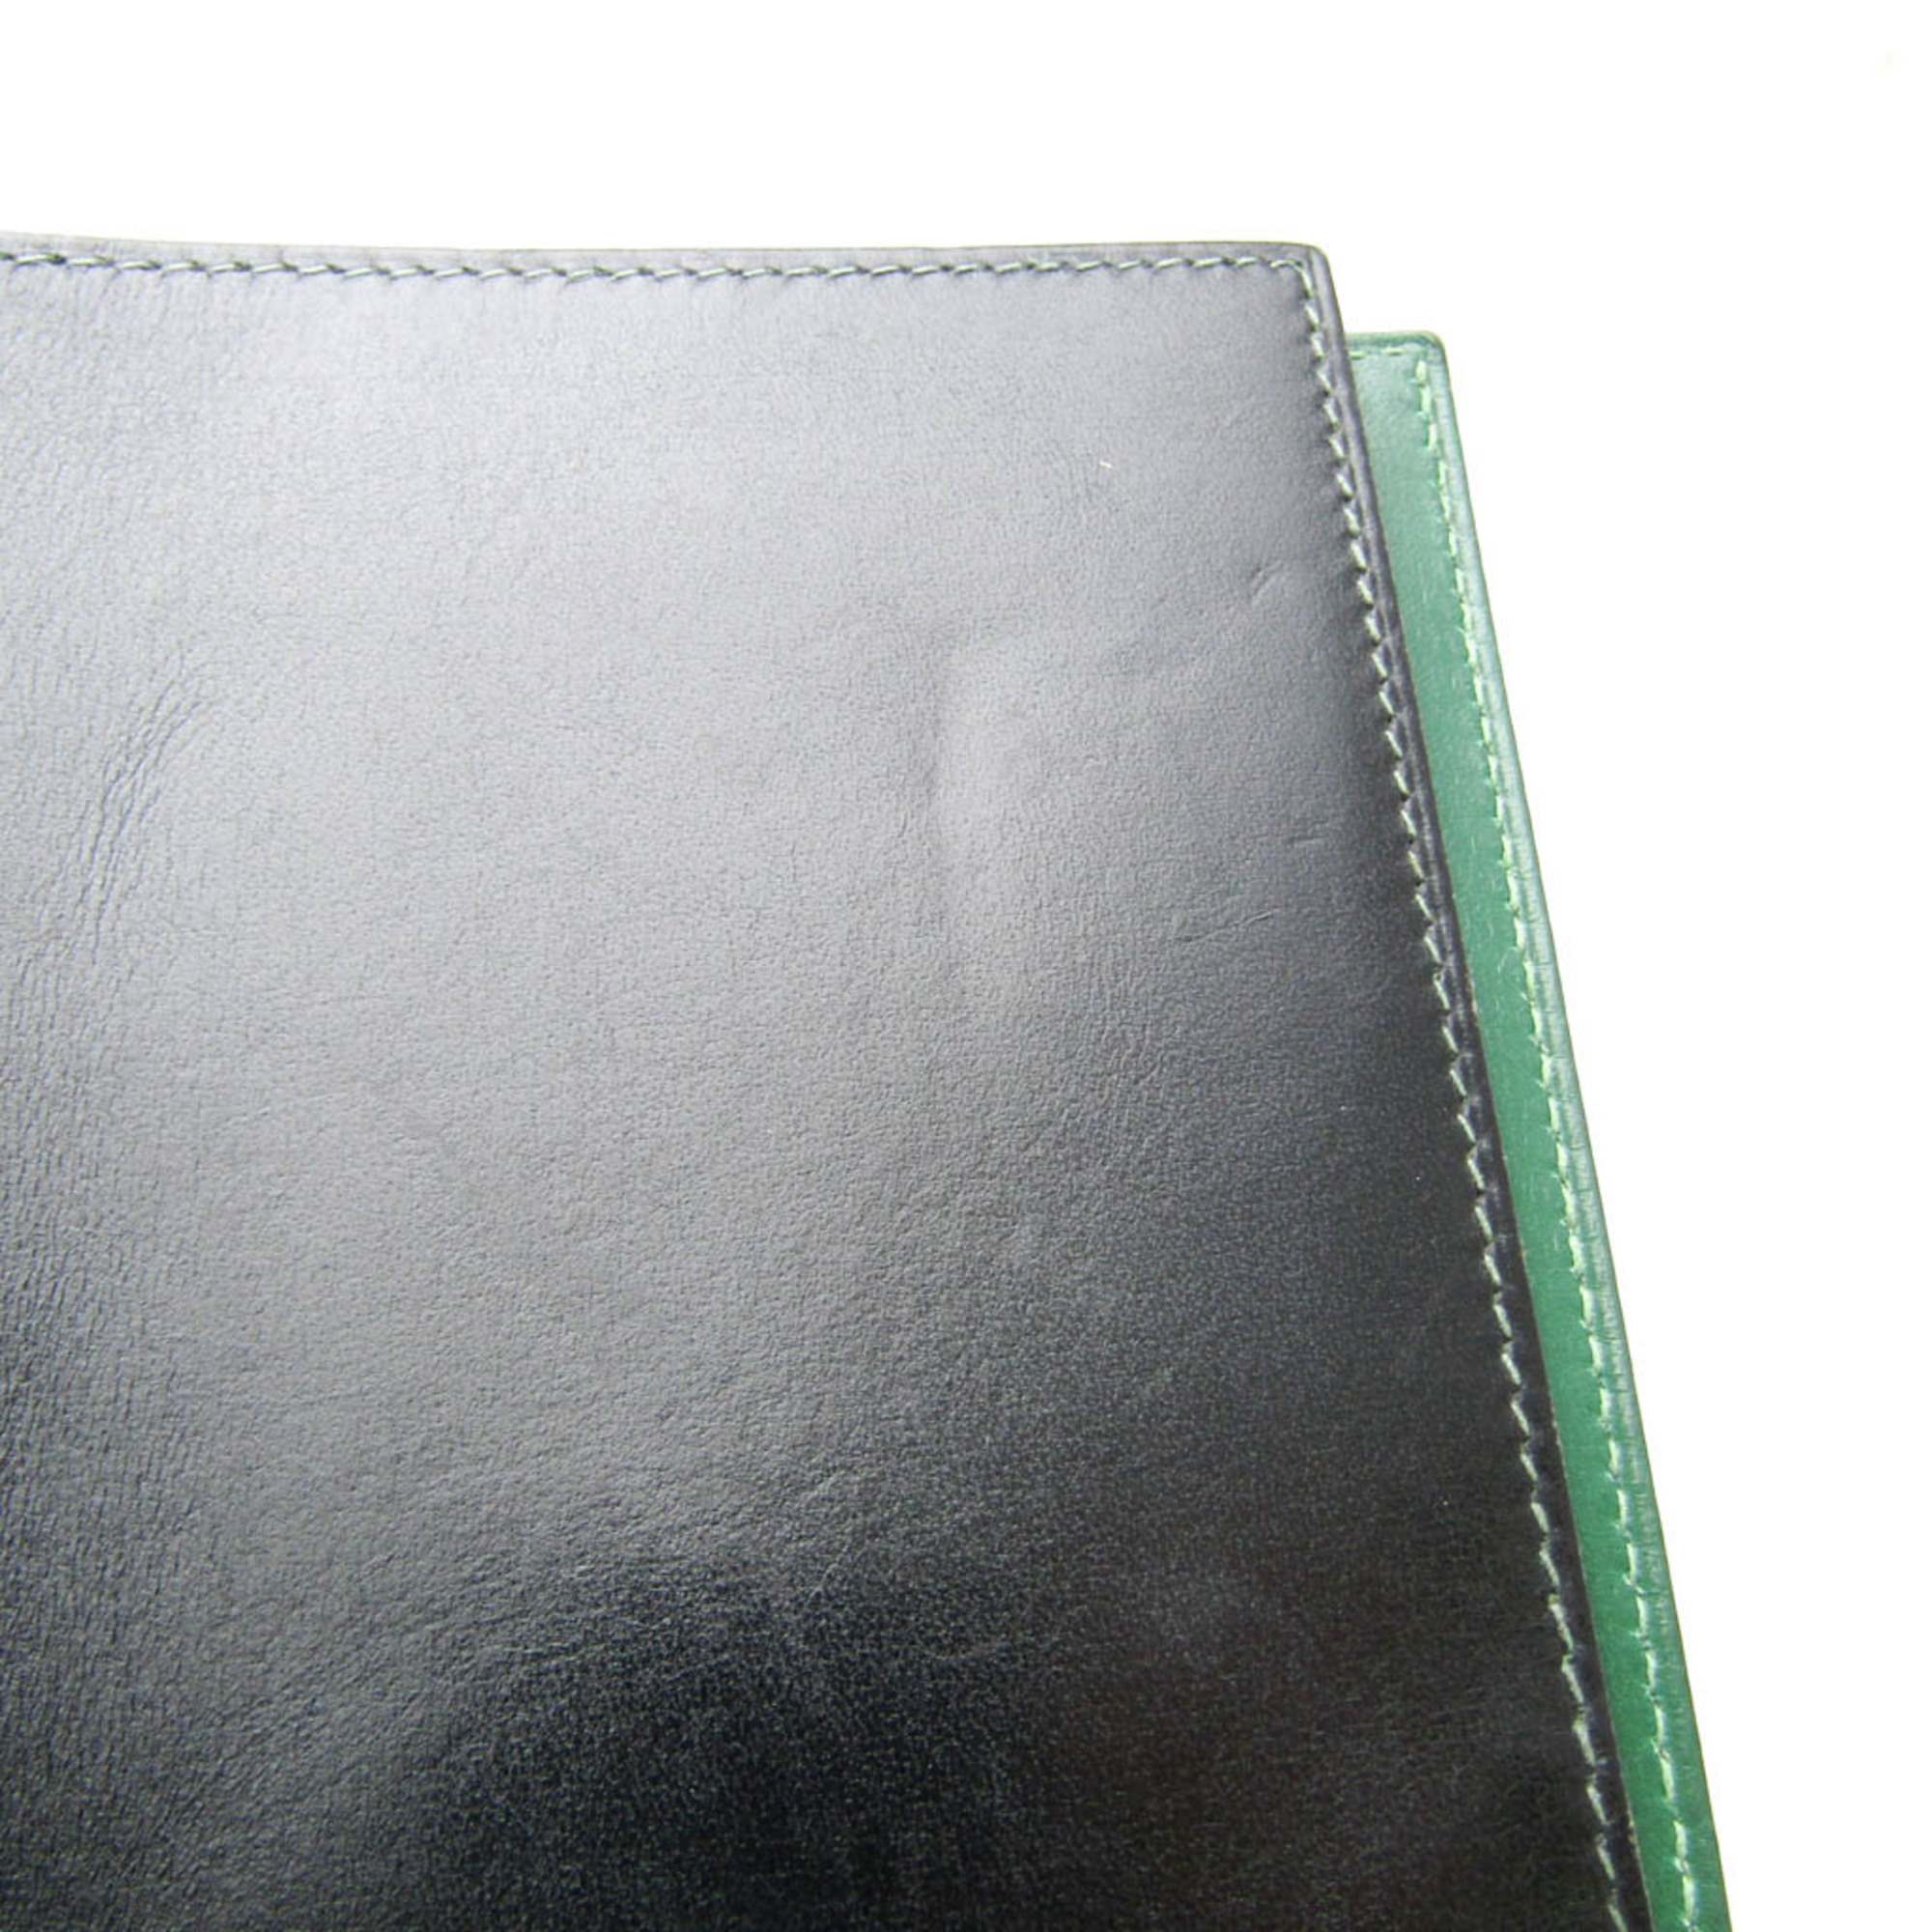 Hermes Agenda Personal Size Planner Cover Black,Green Vision